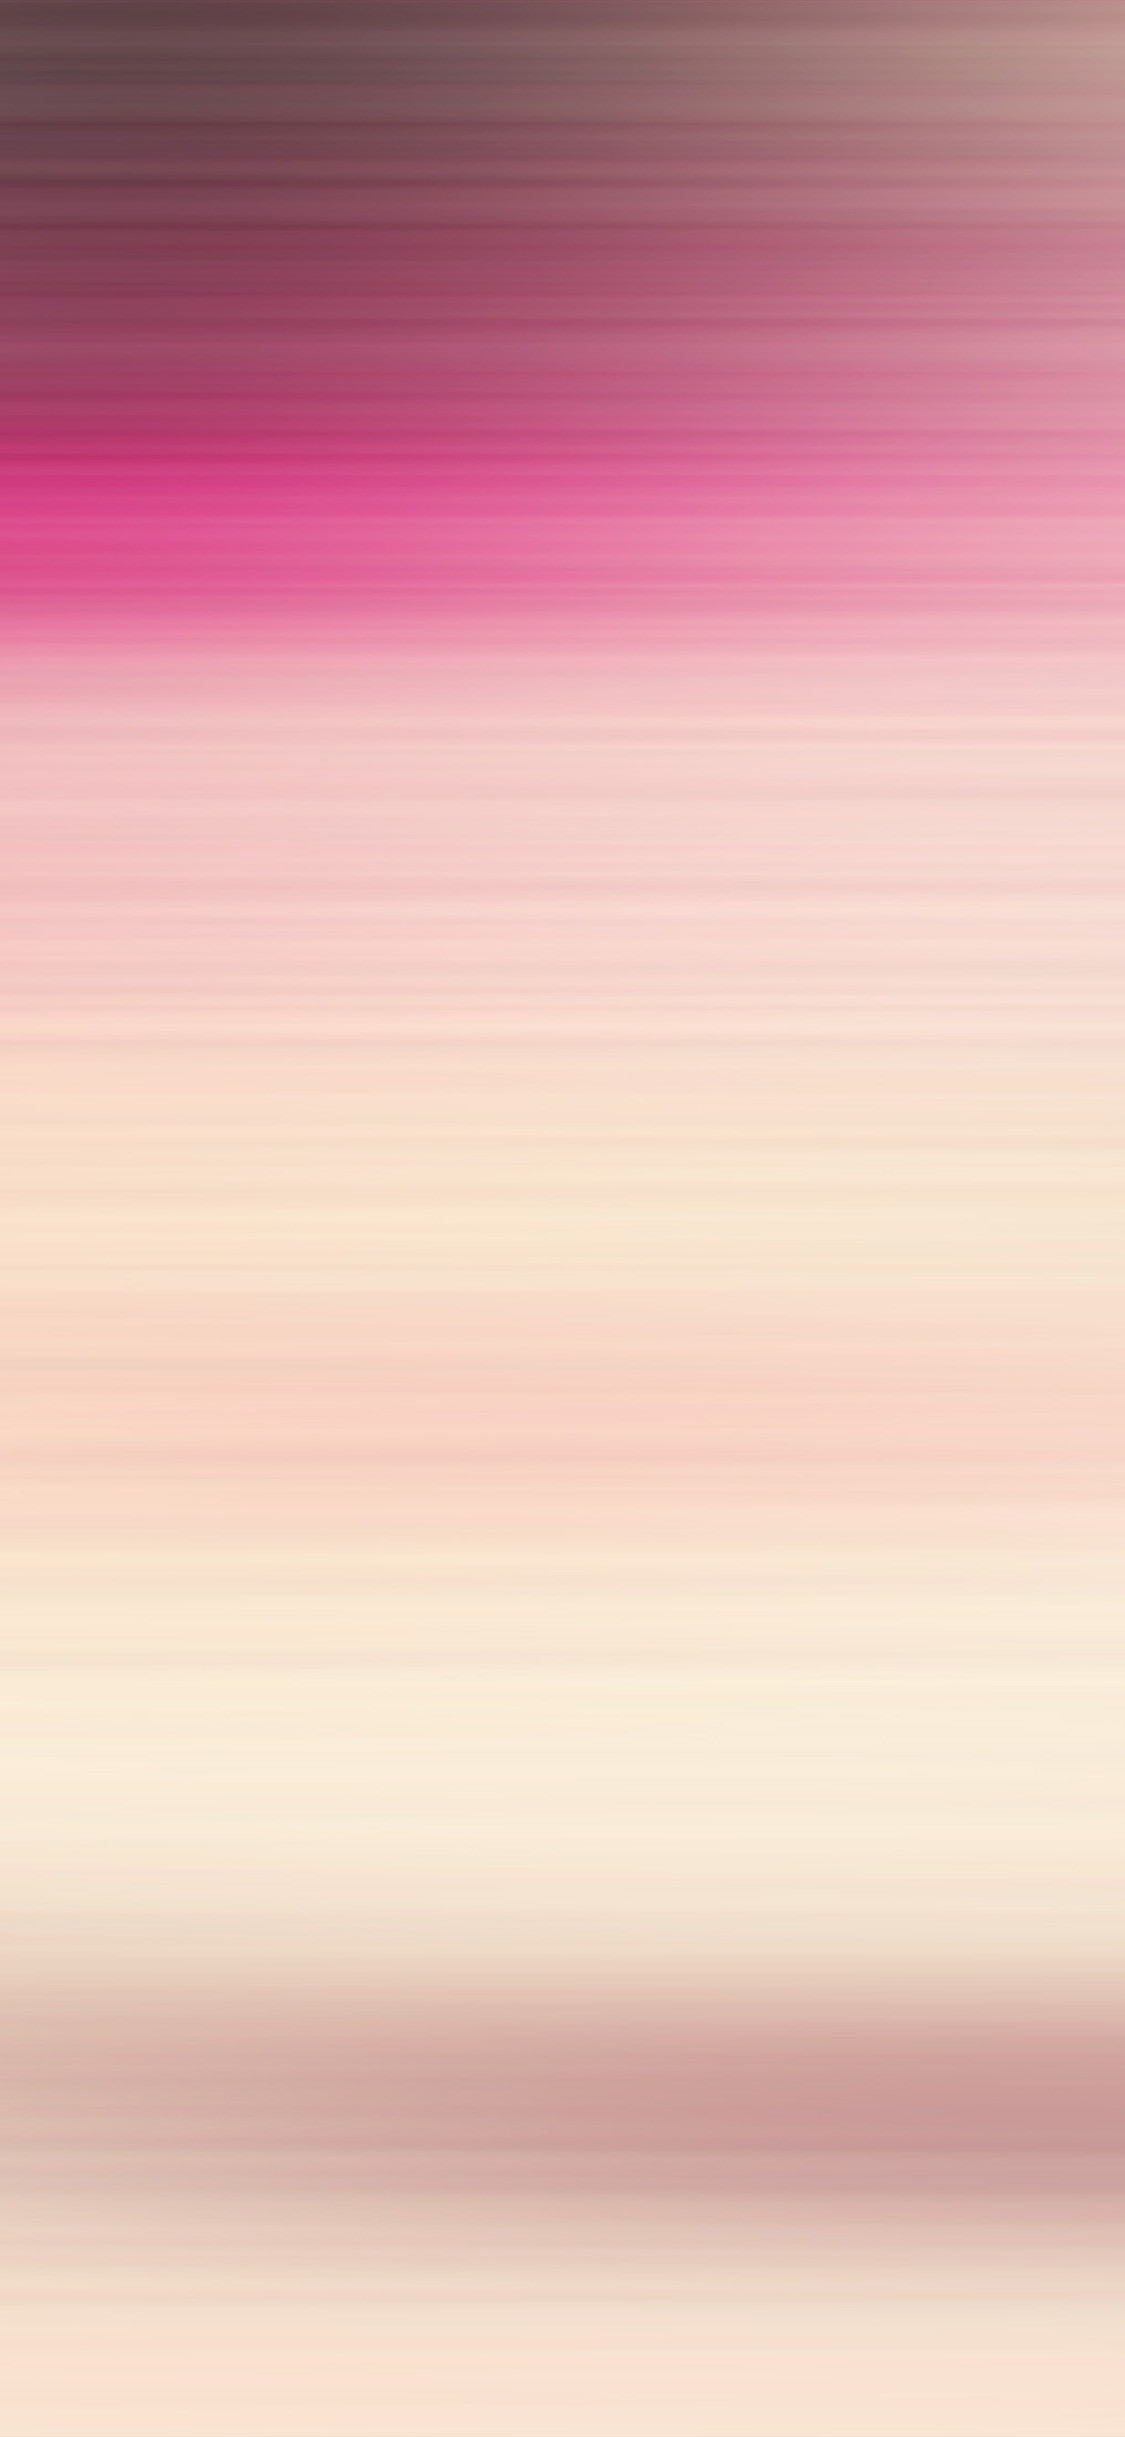 1125x2437 pink-motion-great-parkour-gradation-blur iPhone X Wallpaper